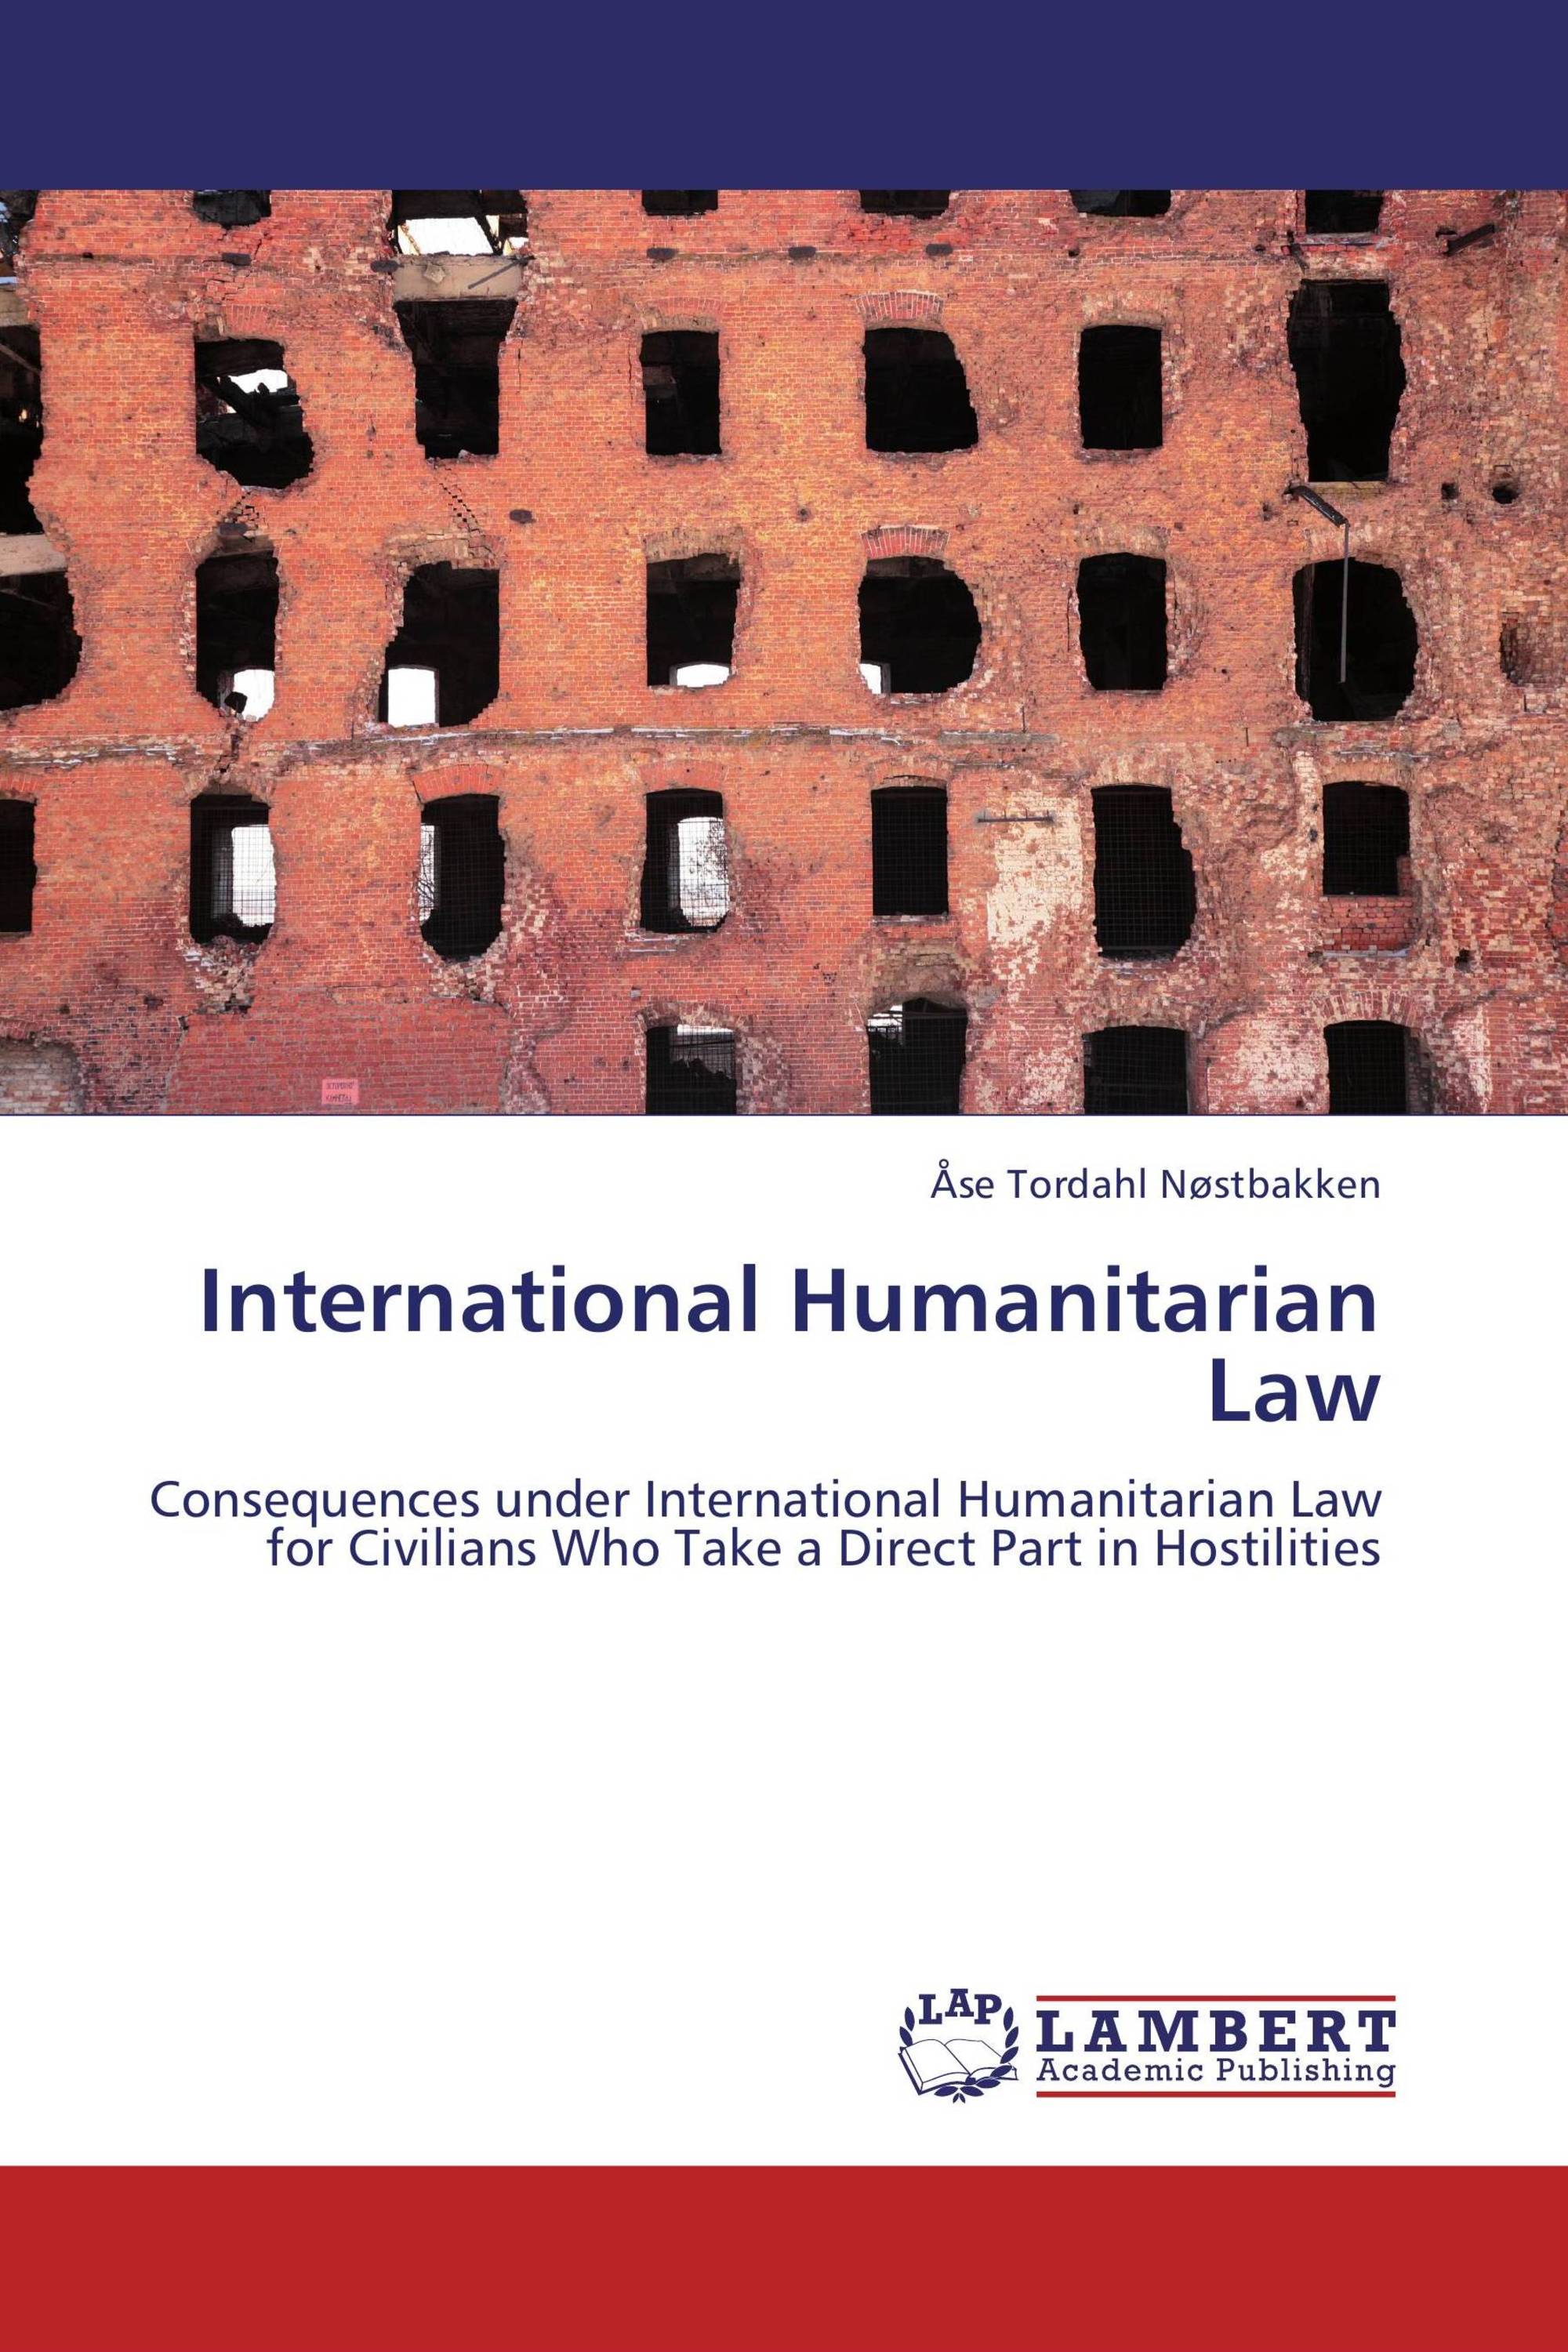 international humanitarian law thesis topics